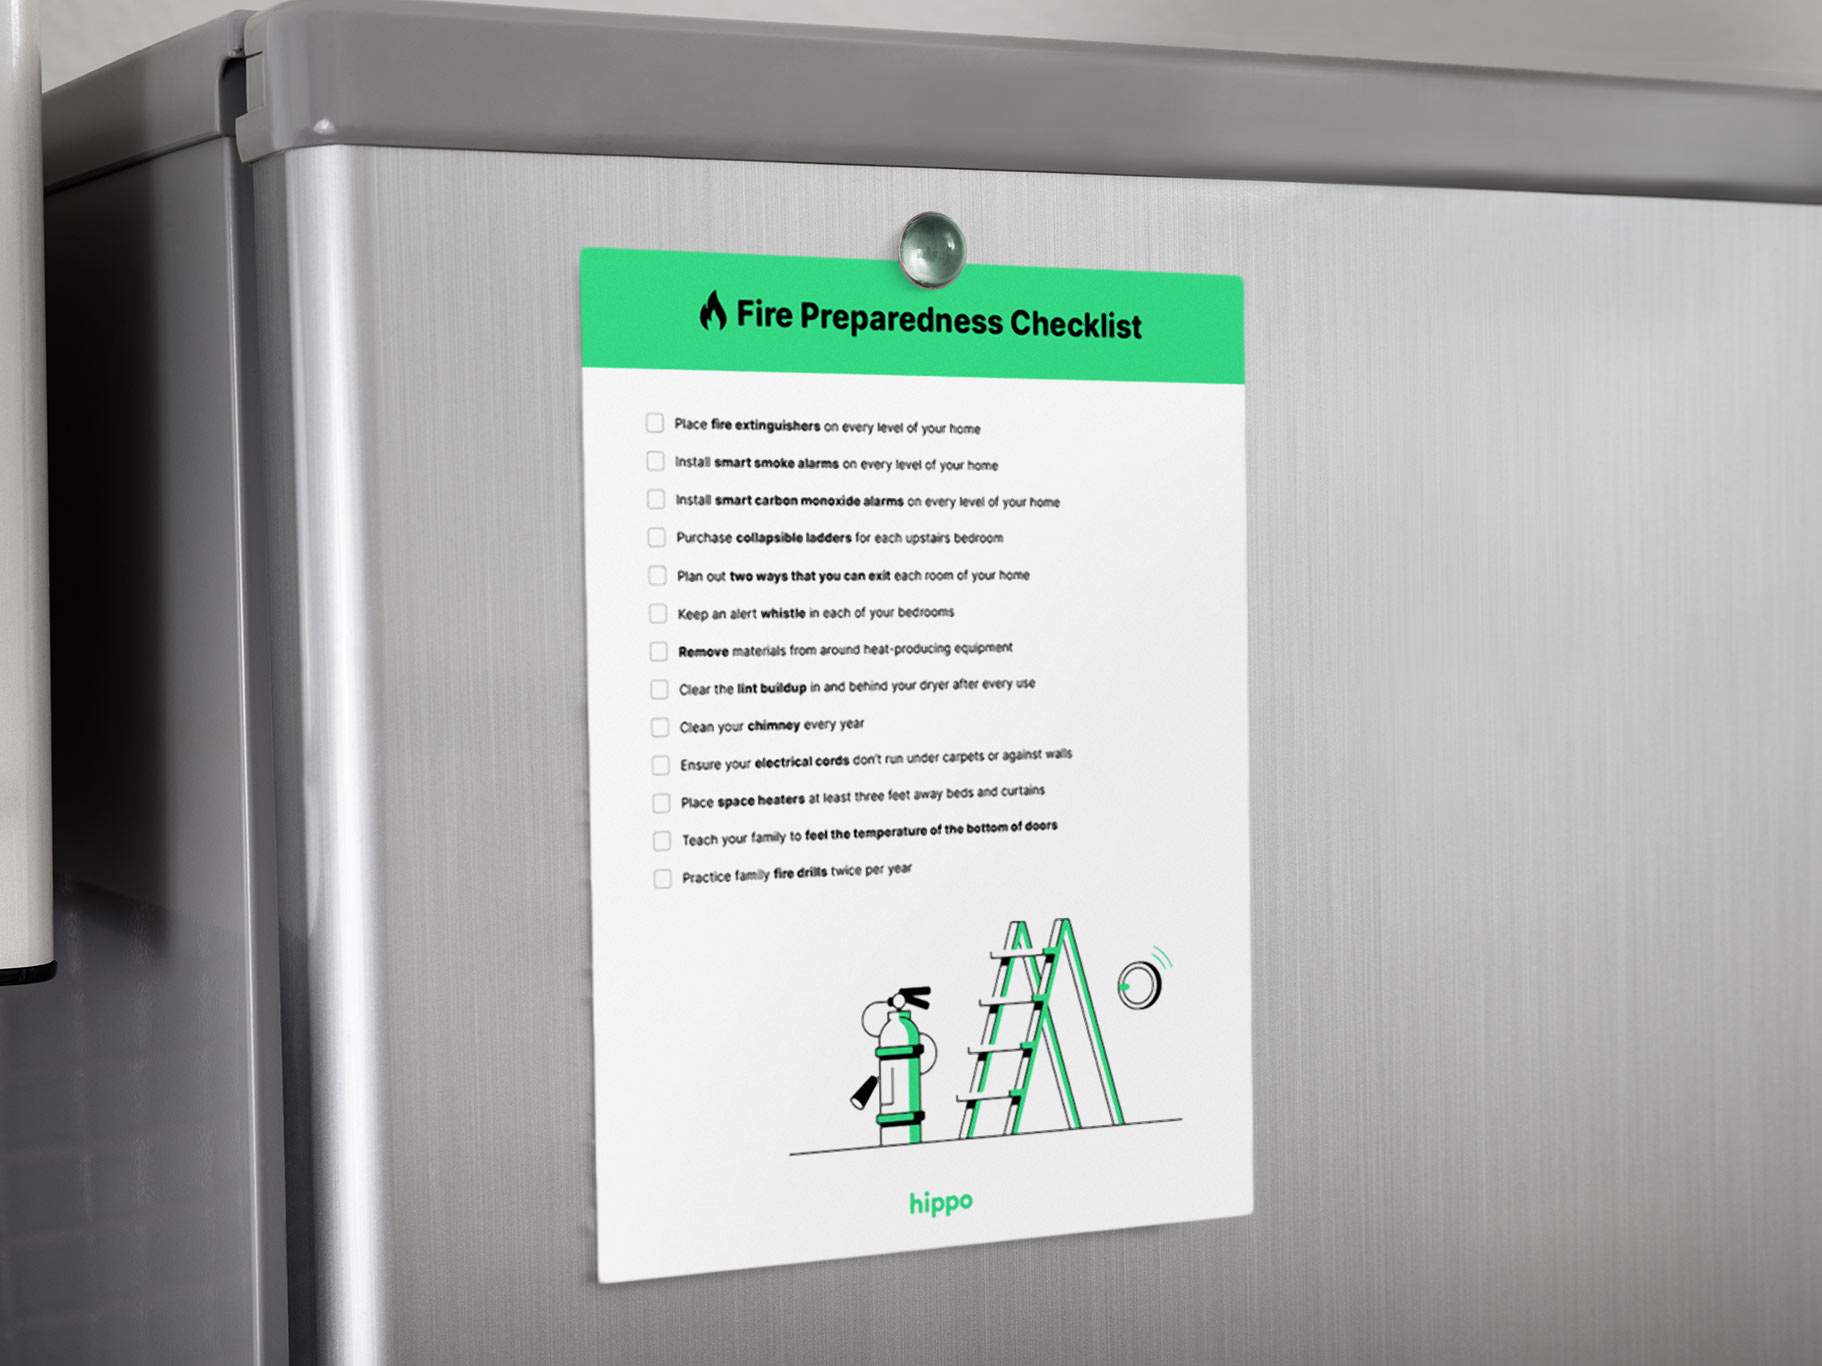 Emergency preparedness checklist on a refrigerator